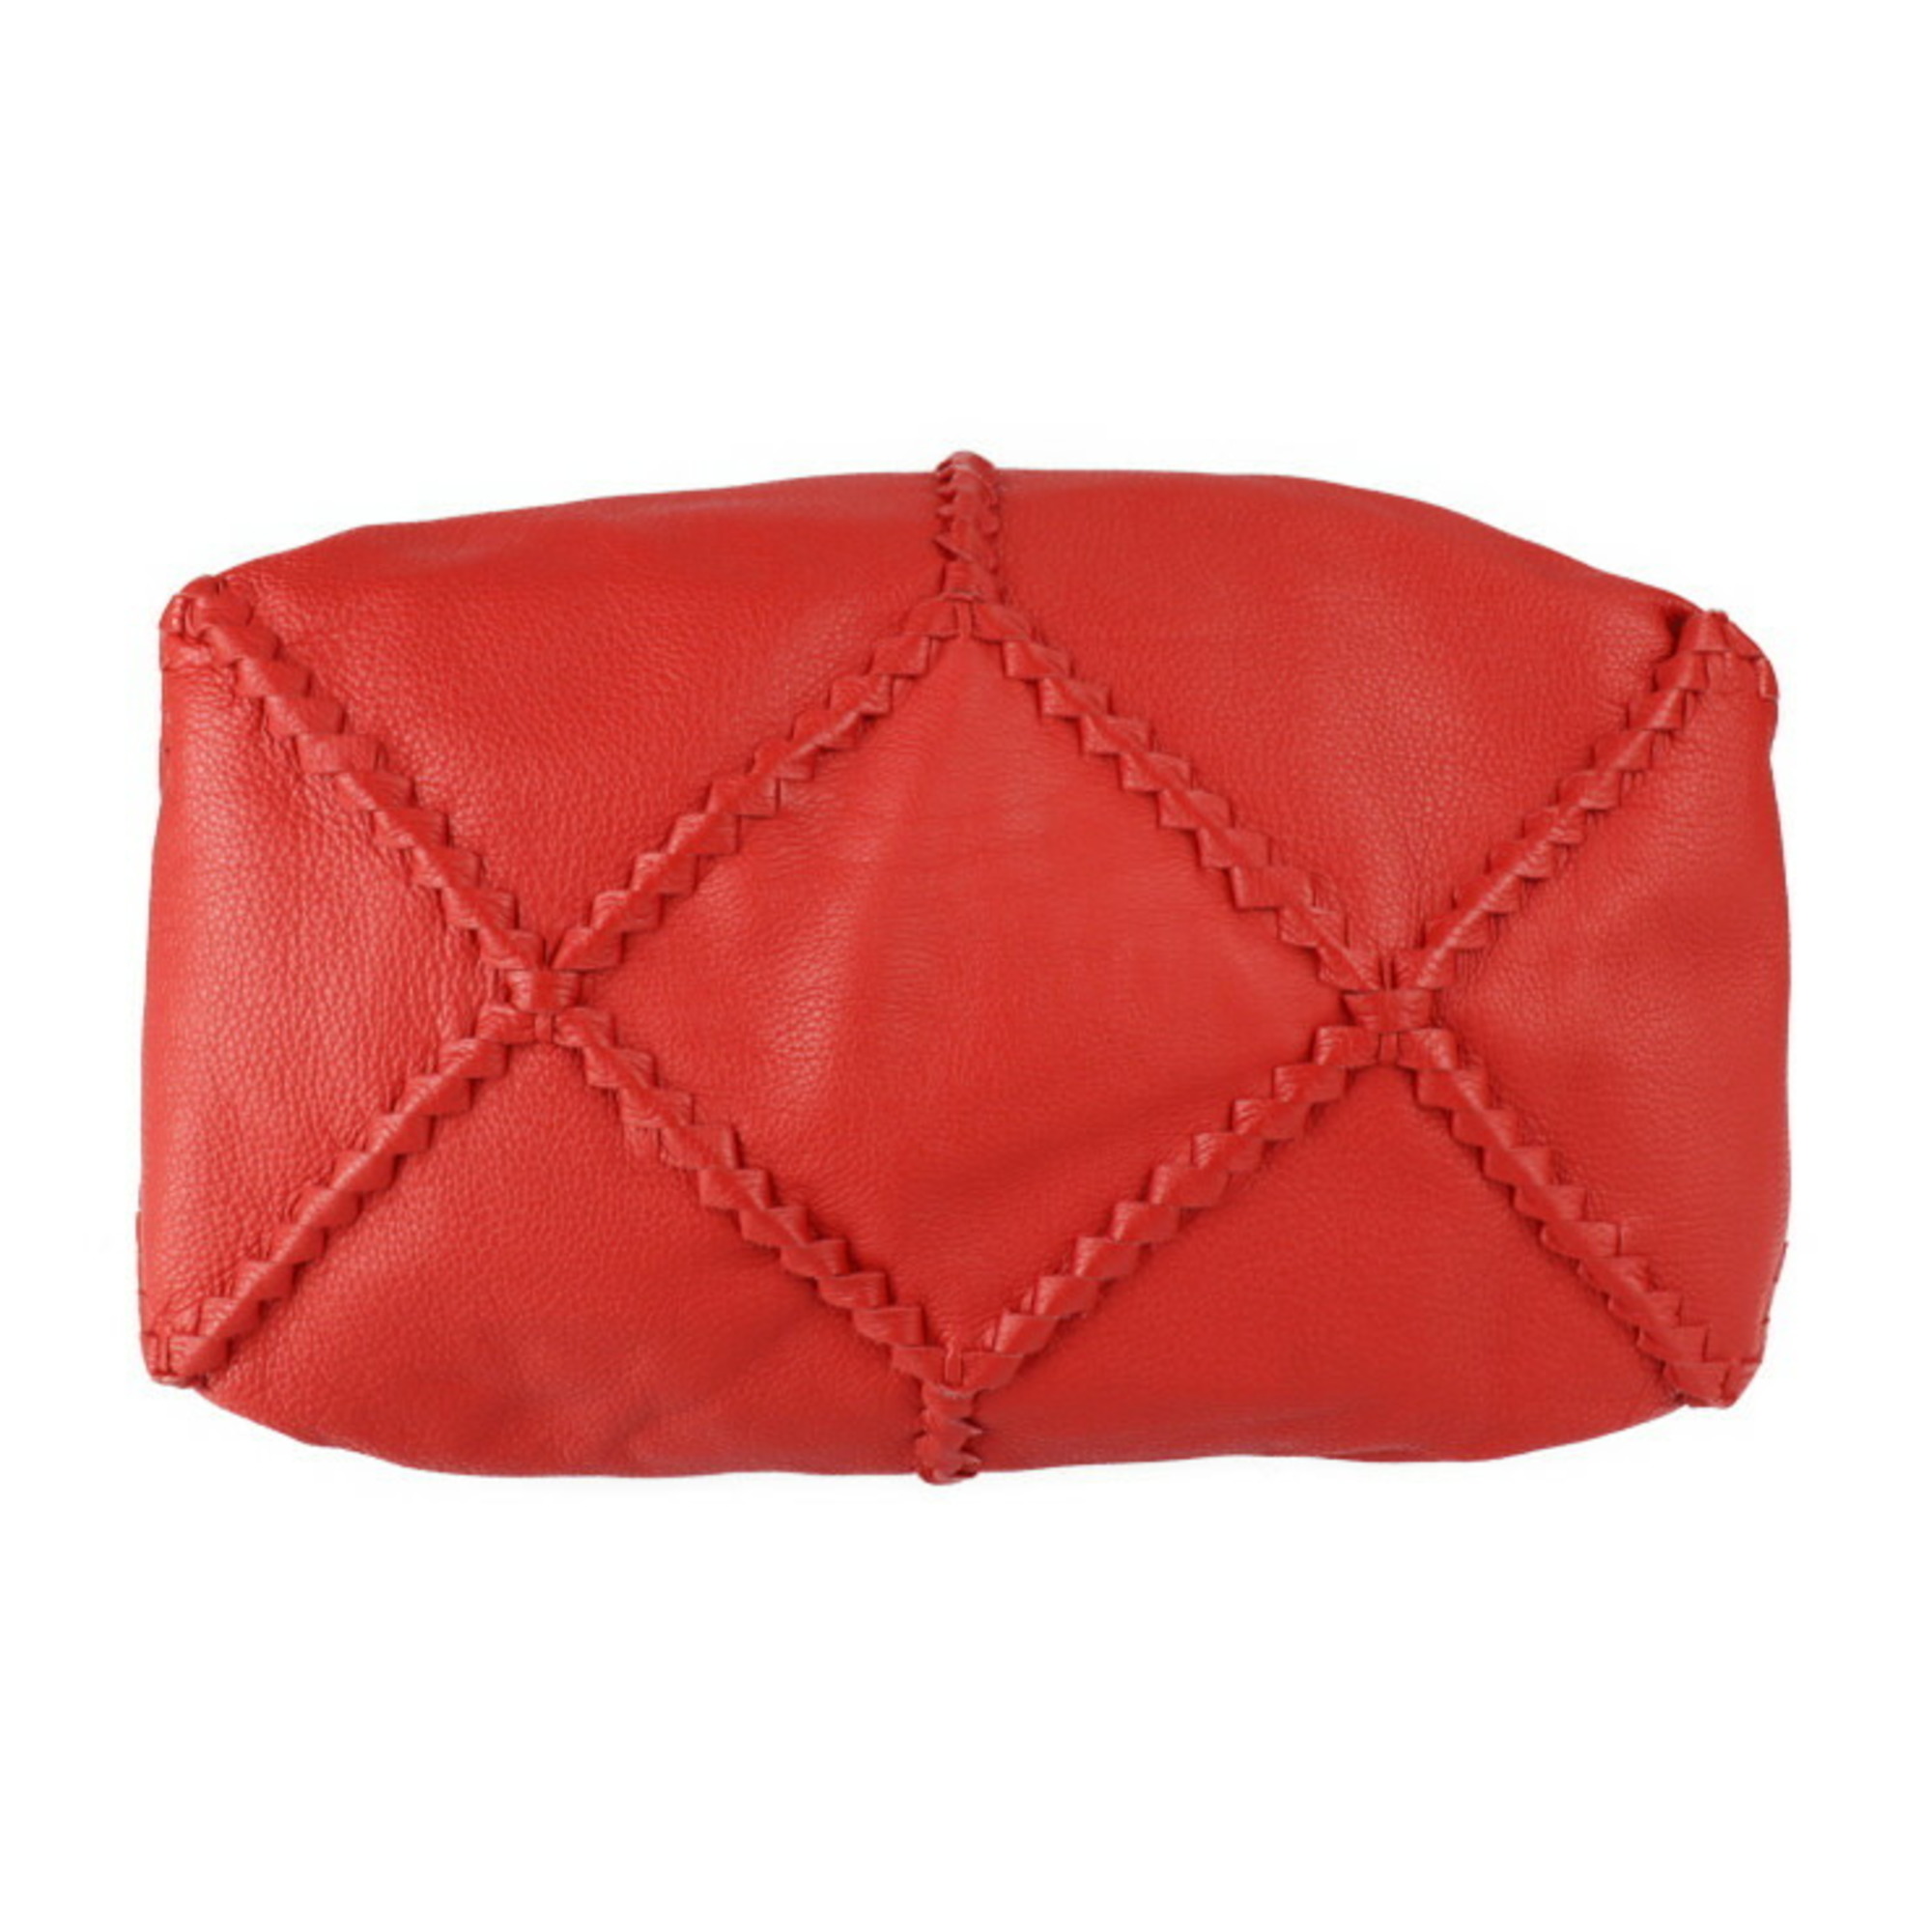 BOTTEGA VENETA Cervo Medium Shoulder Bag 468600 Leather Red Intrecciato Handbag Tote